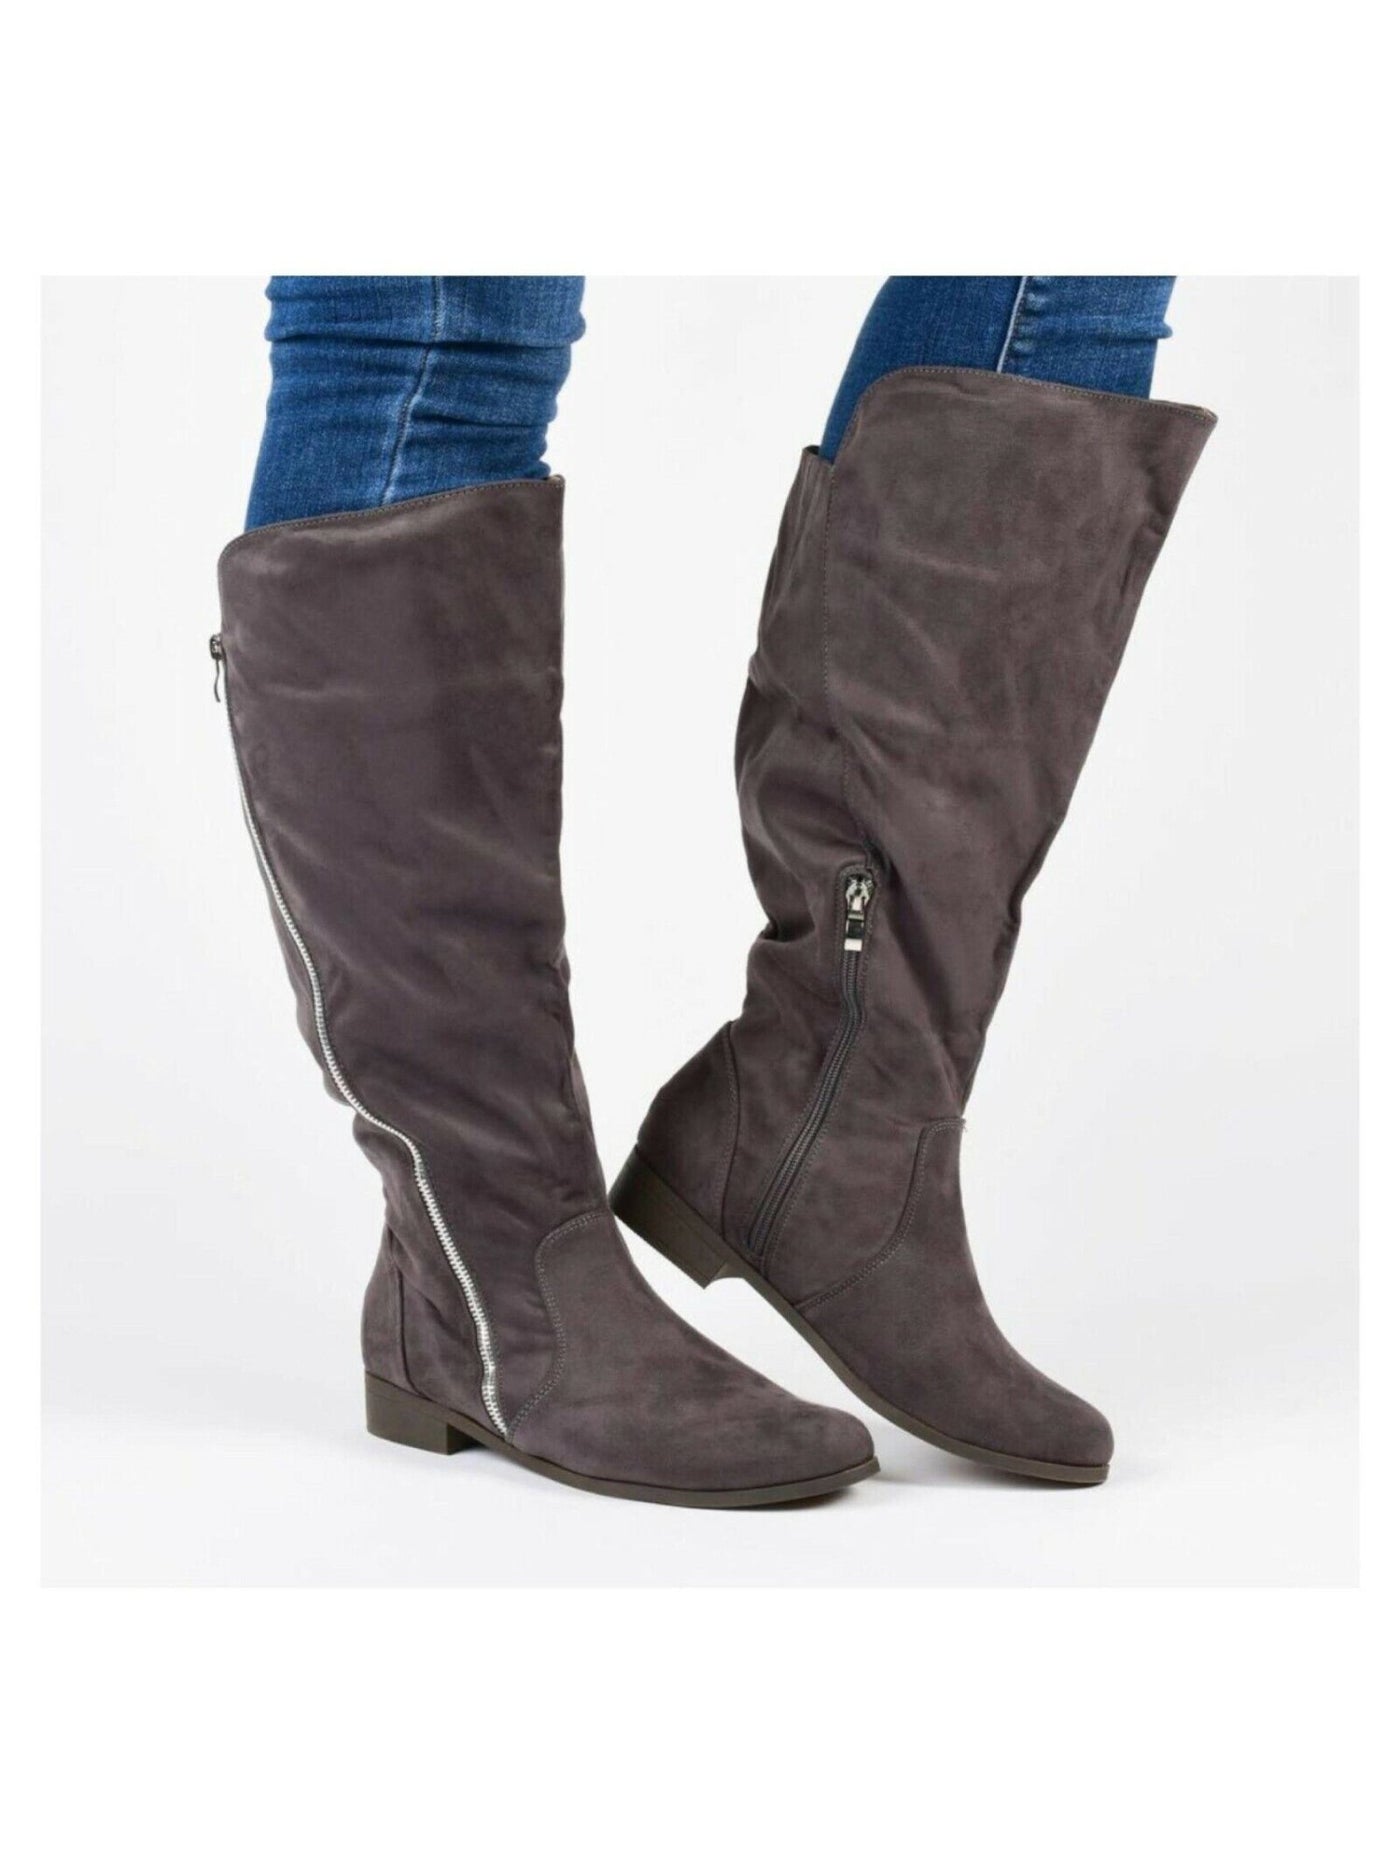 JOURNEE COLLECTION Womens Gray Diagonal Zipper Detail Asymmetrical Round Toe Block Heel Zip-Up Boots Shoes 8.5 M